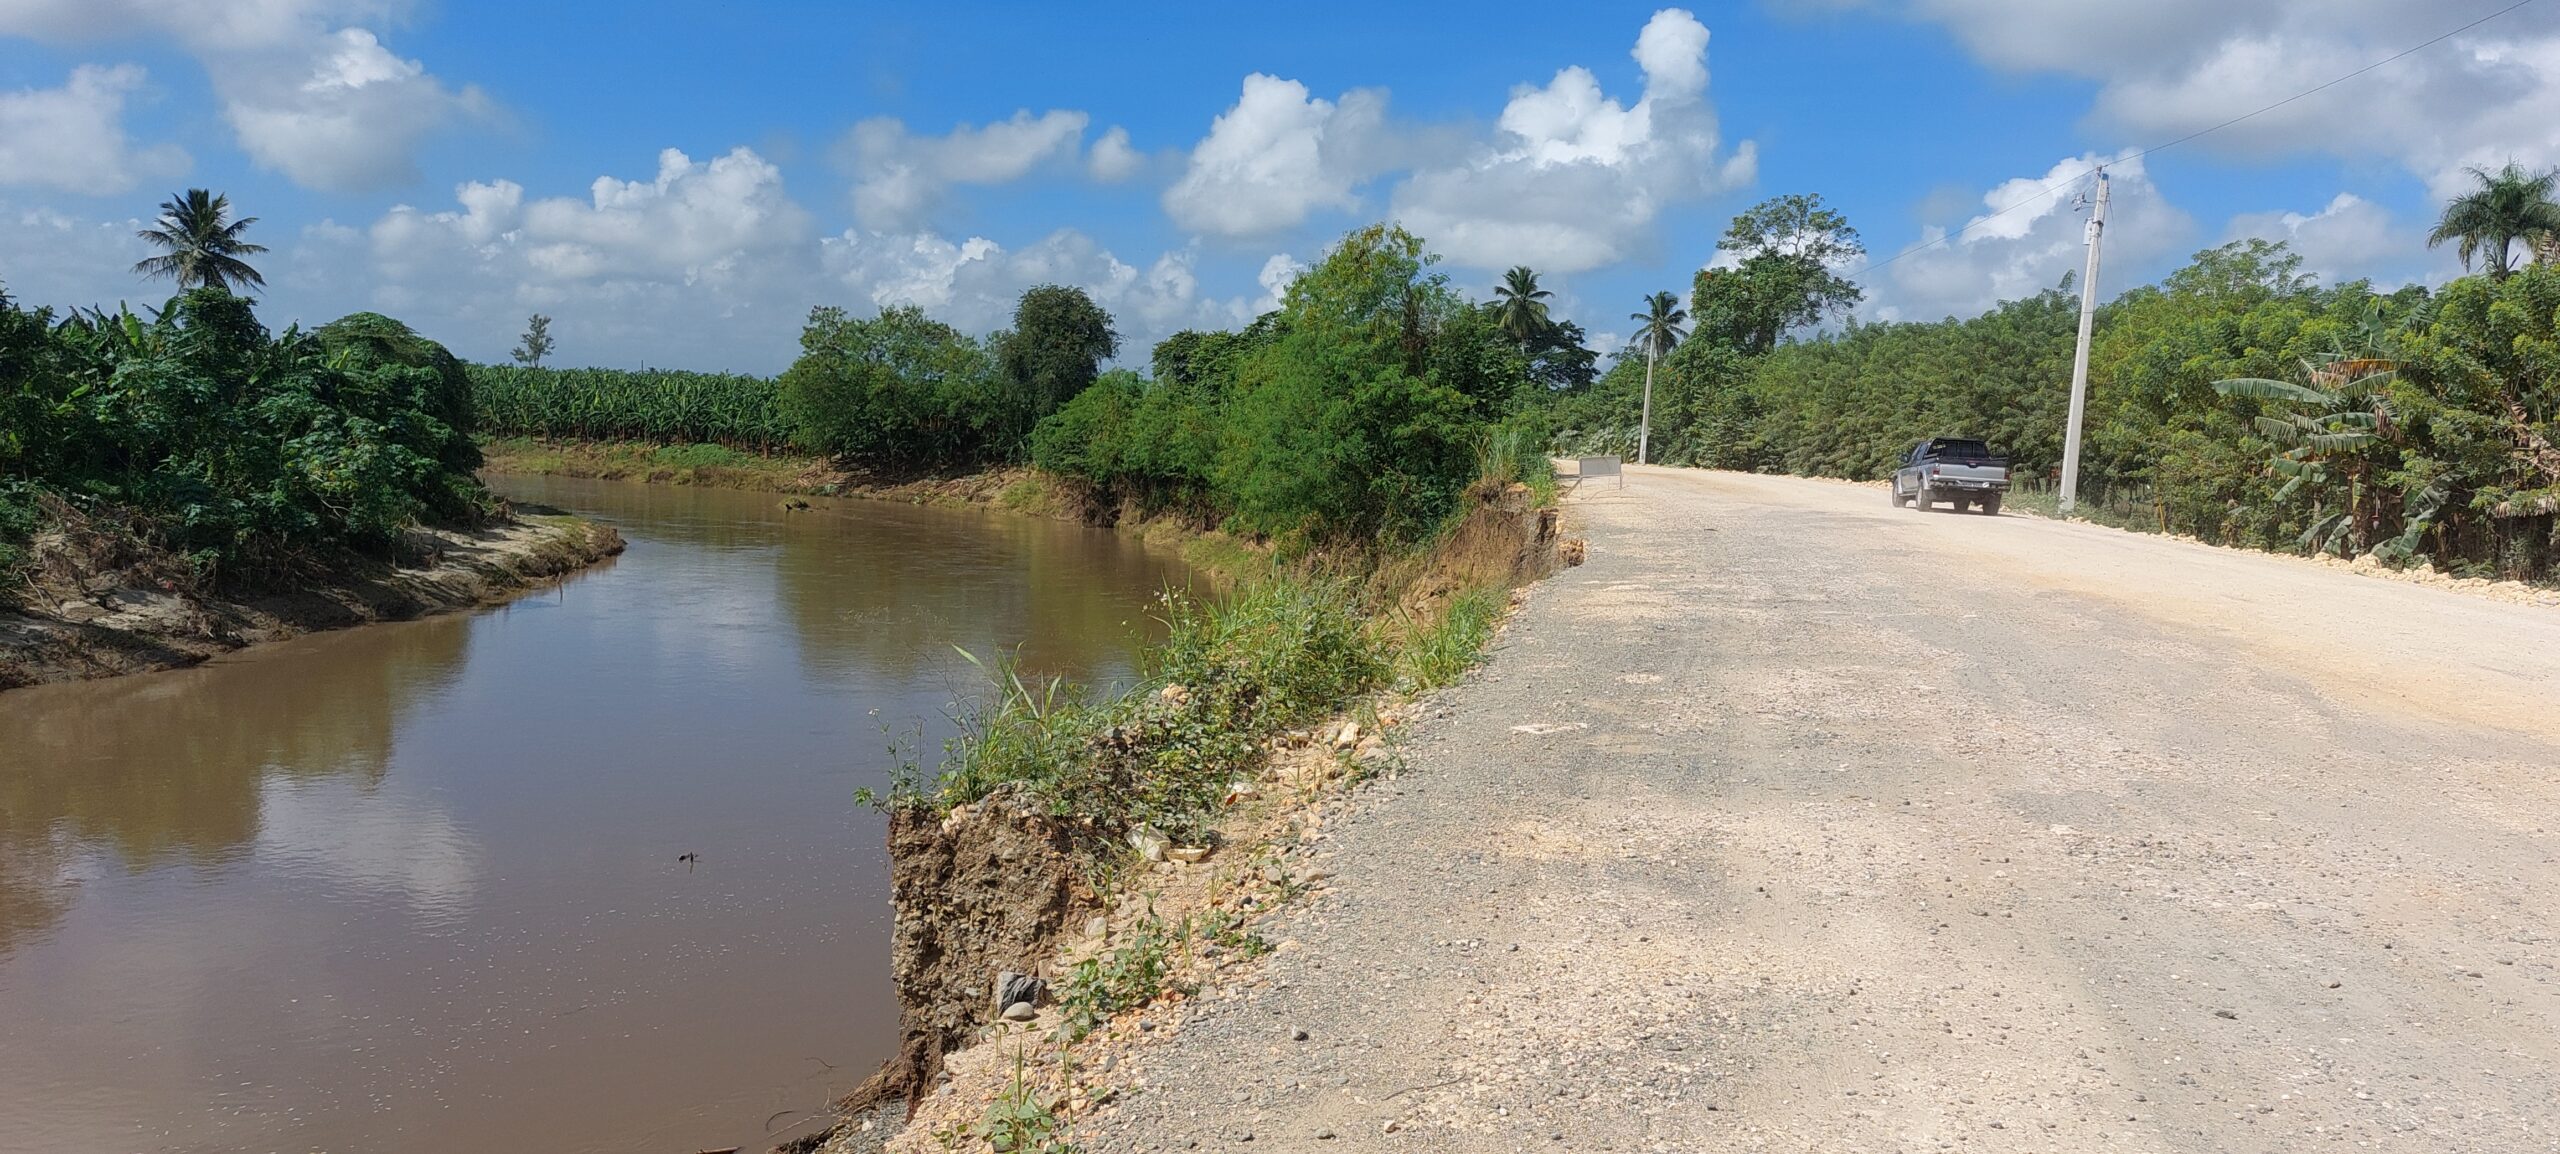 [VIDEO] Pimentel quedara incomunicada vía terrestre del Municipio de Cotui